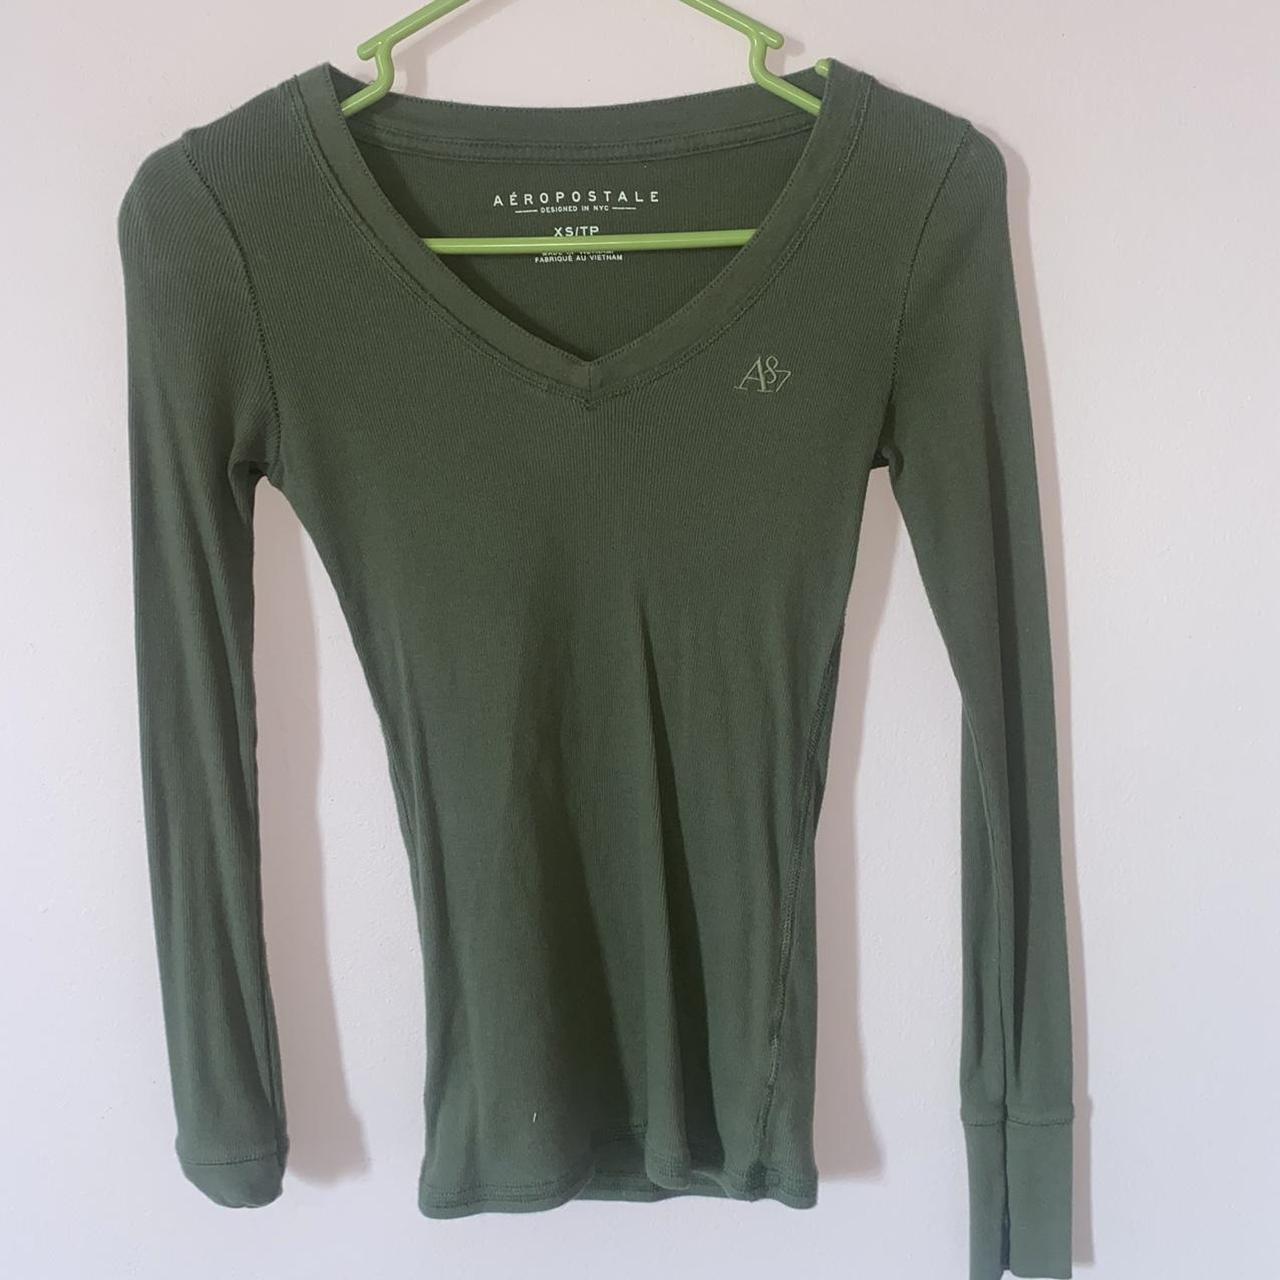 Aeropostale Women's Green and Khaki Shirt